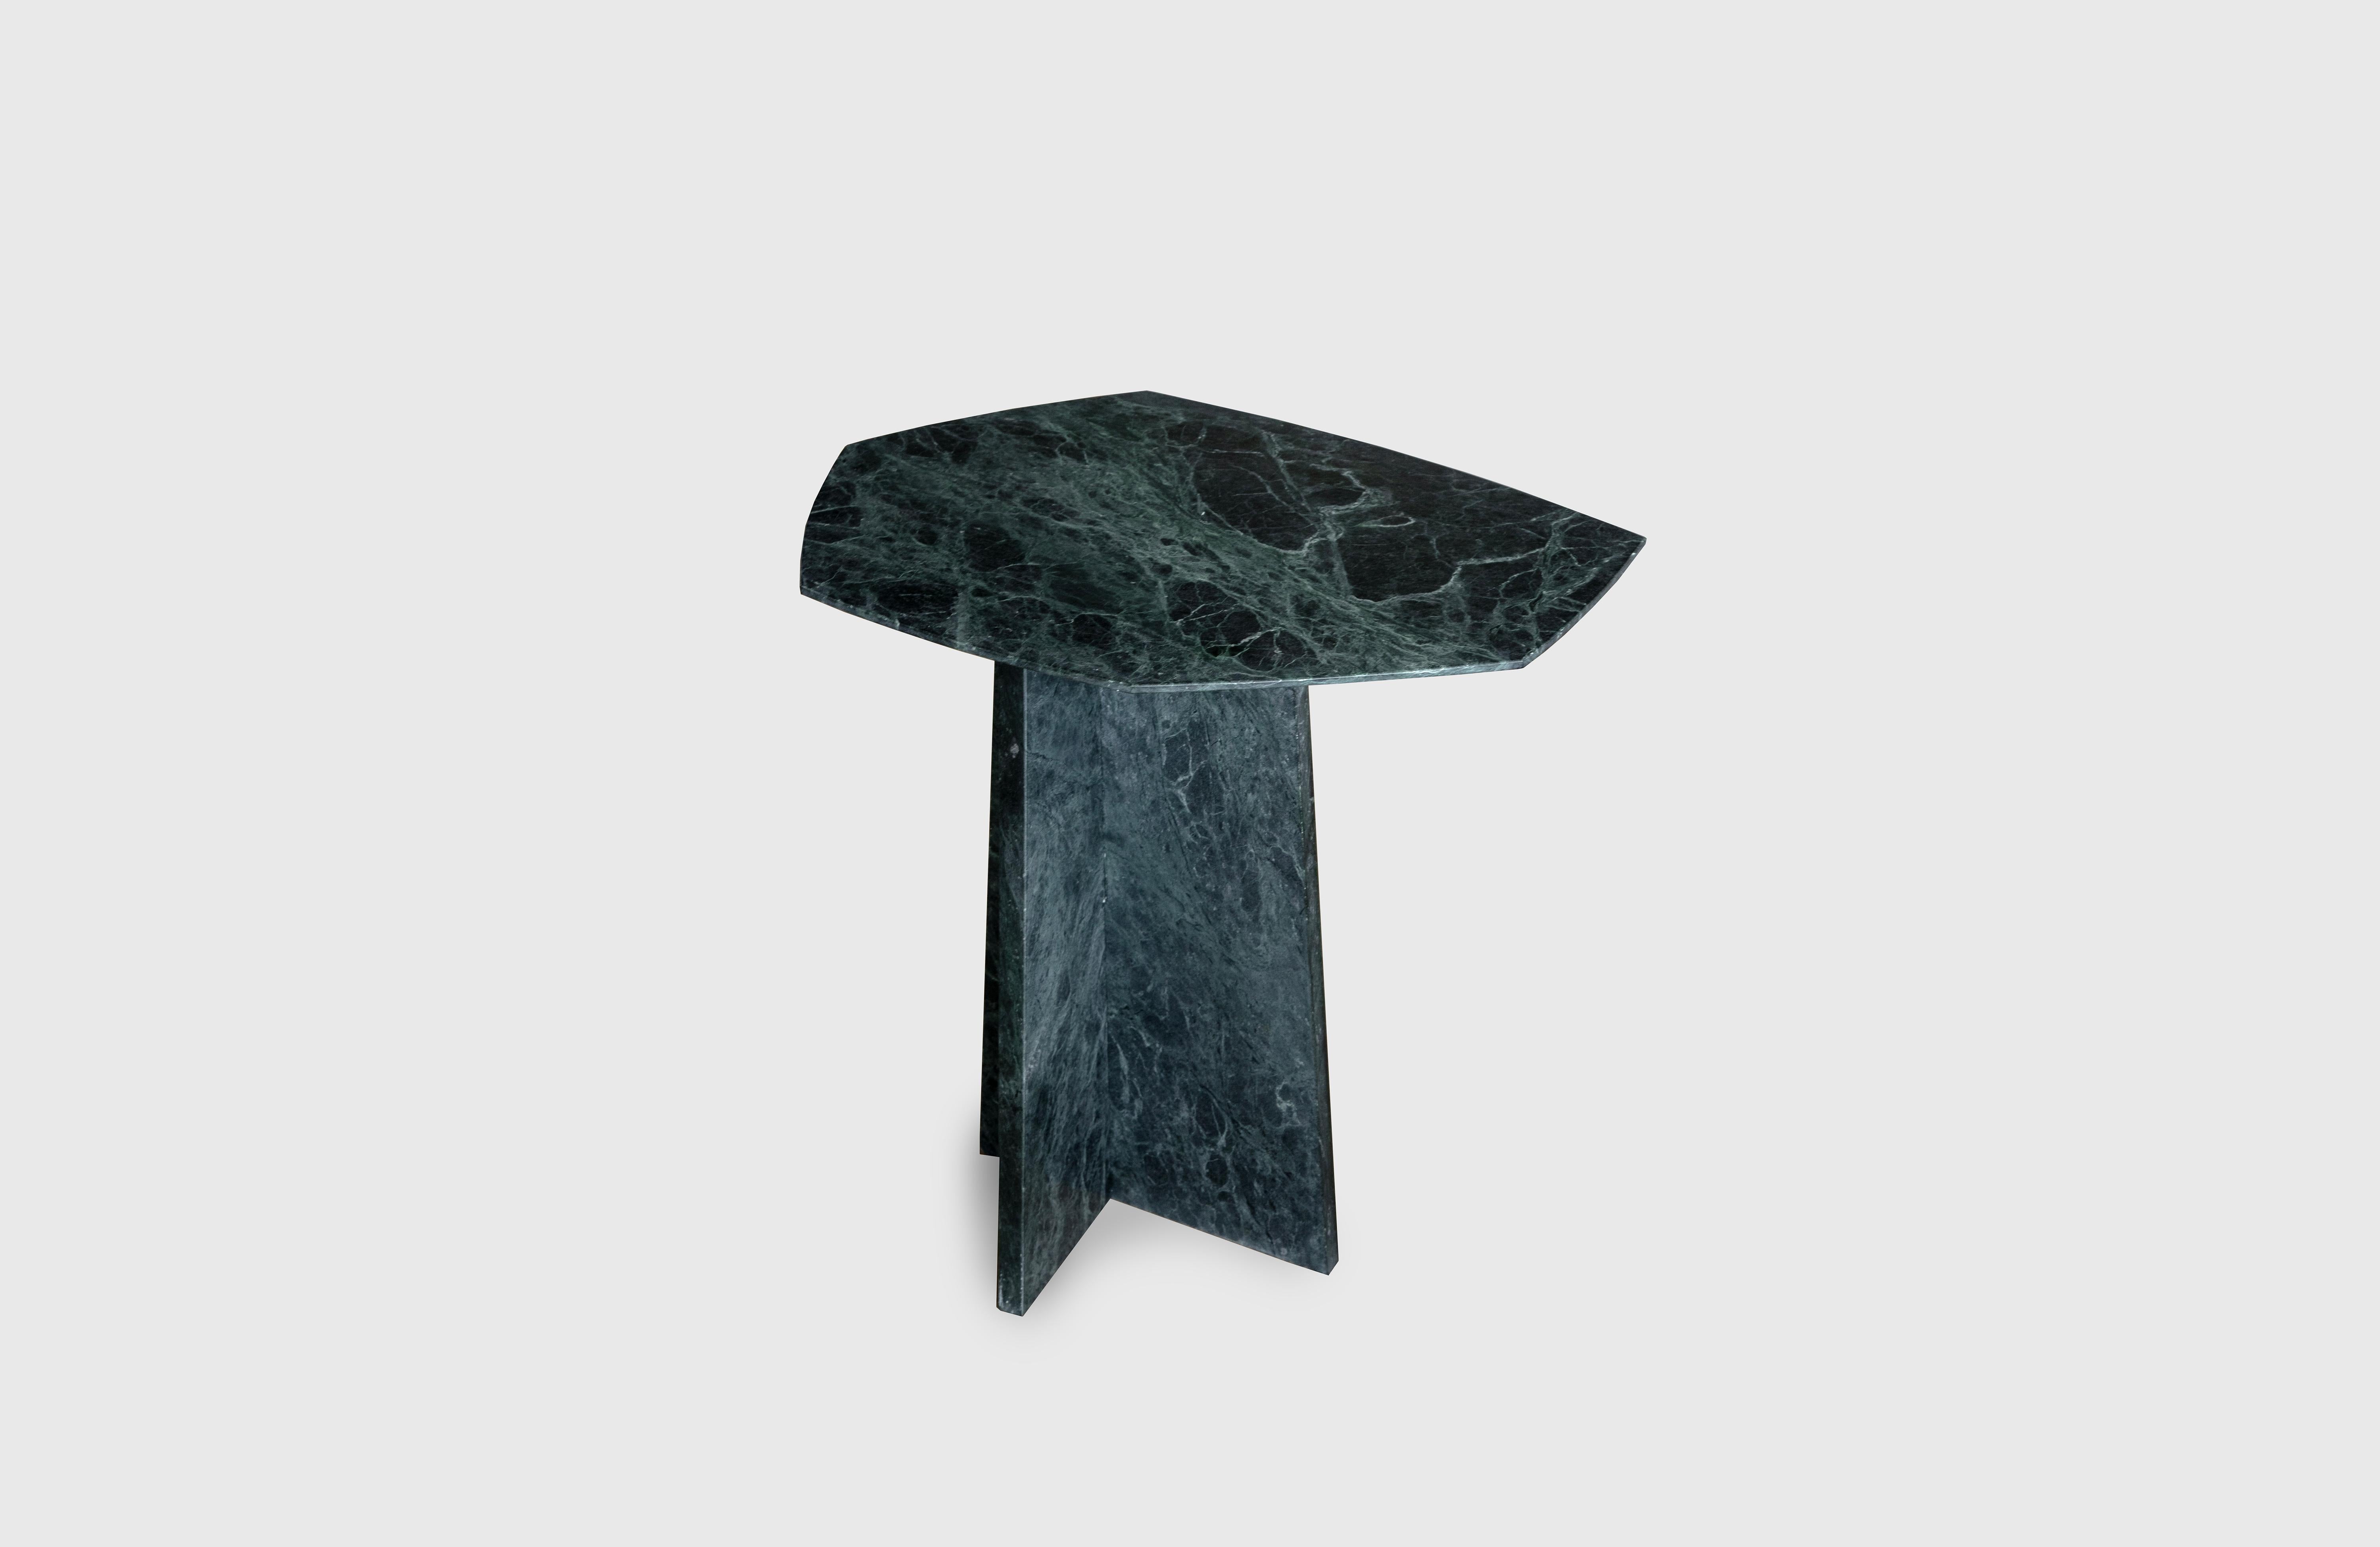 Geometrik Side table with brass/steel lip 
Designer - Alexander Diaz Anderson 

Measurement: 

Small
L 49.2cm/19.3”
W 36.6cm/14.4”
H 48.0cm/18.8”
or
Large
L 50.0cm/19.6”
W 36.6cm/14.4”
H 53.0cm/20.8”

Price quoted for Silver Travertine Stone. 
We